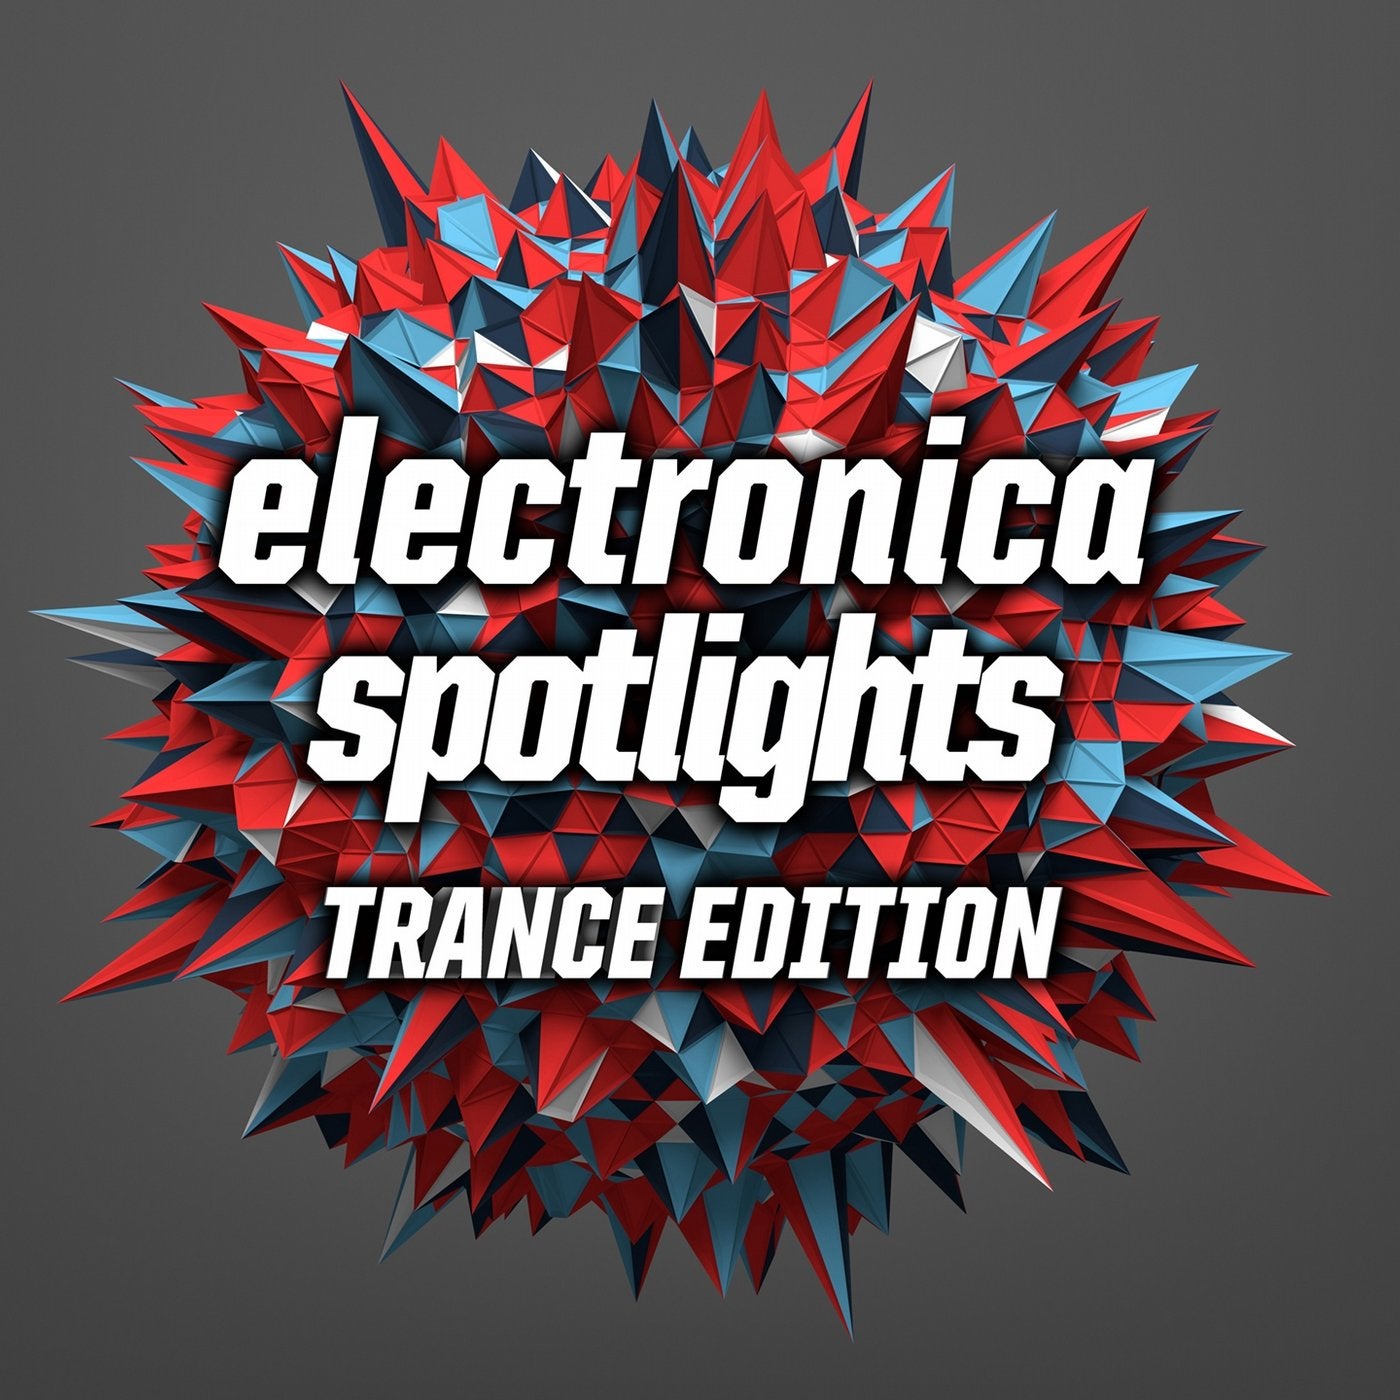 Electronica Spotlights, Trance Edition